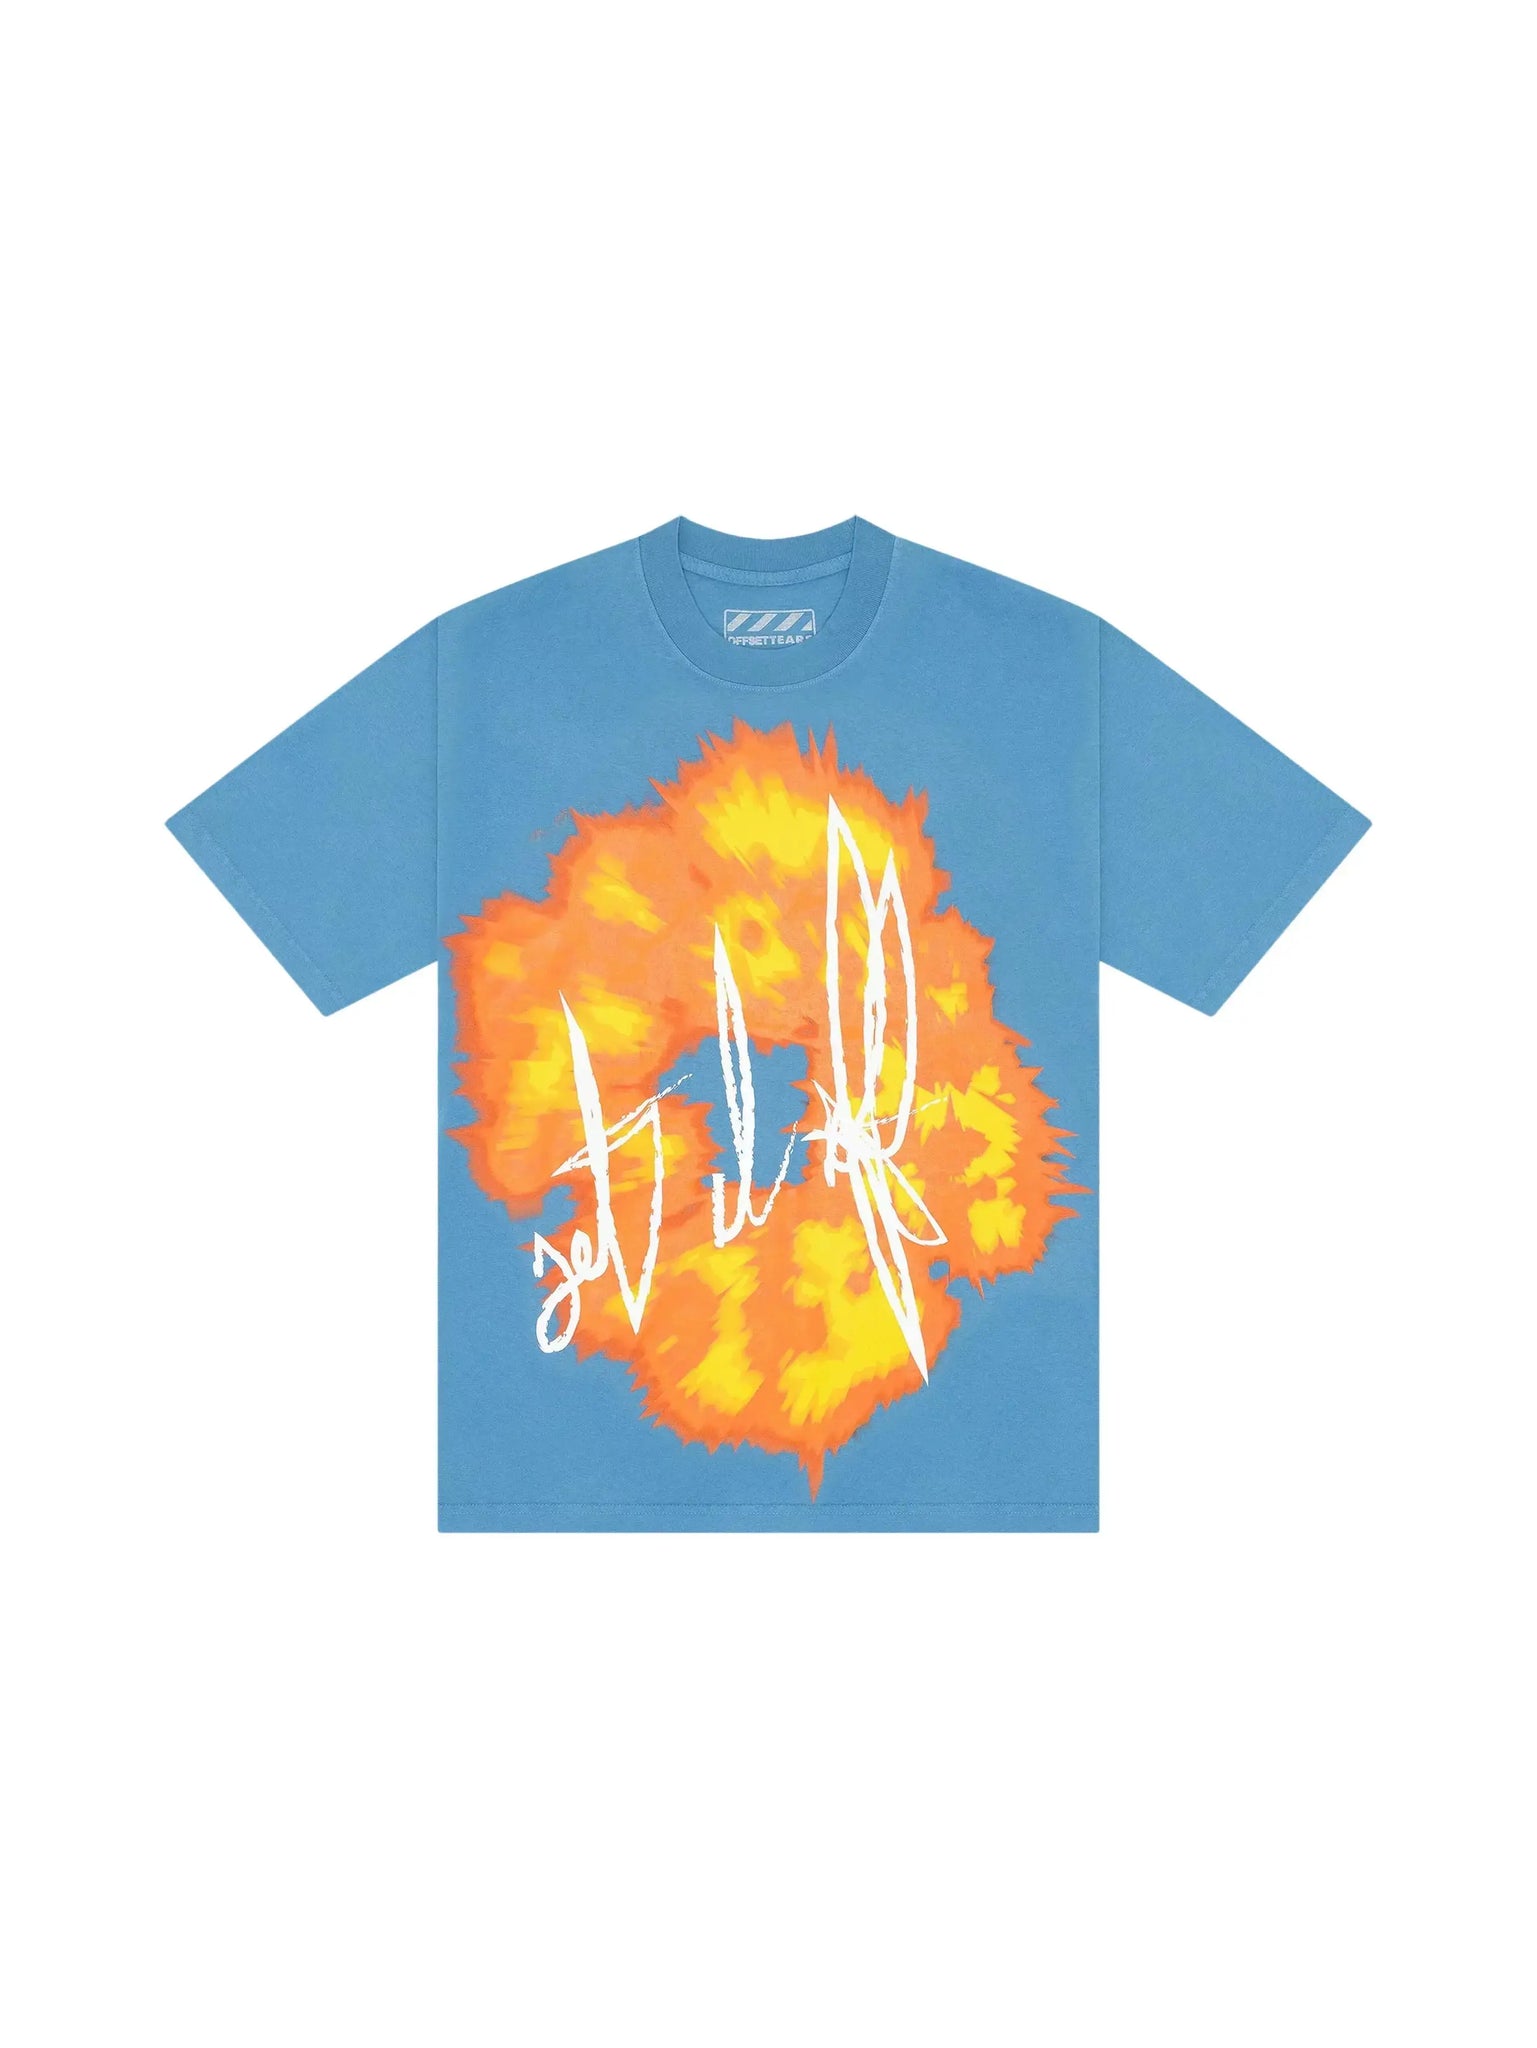 Denim Tears x Offset Set It Off #1 T-shirt Blue in Auckland, New Zealand - Shop name